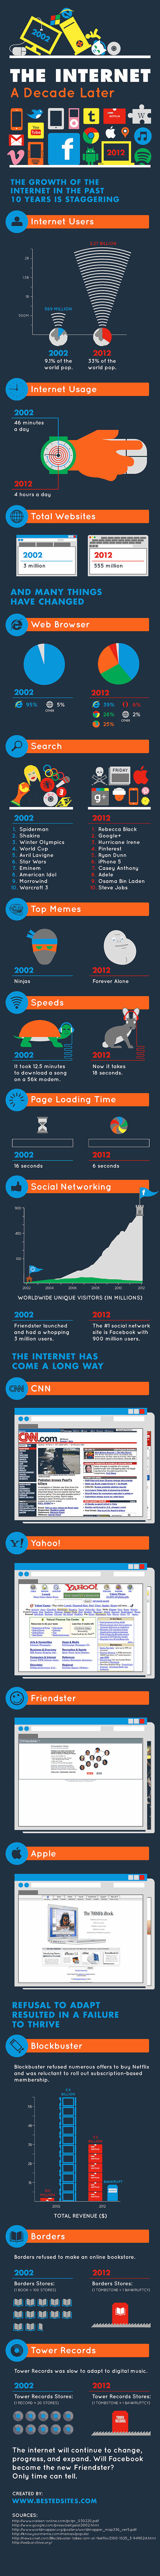 internet infographic